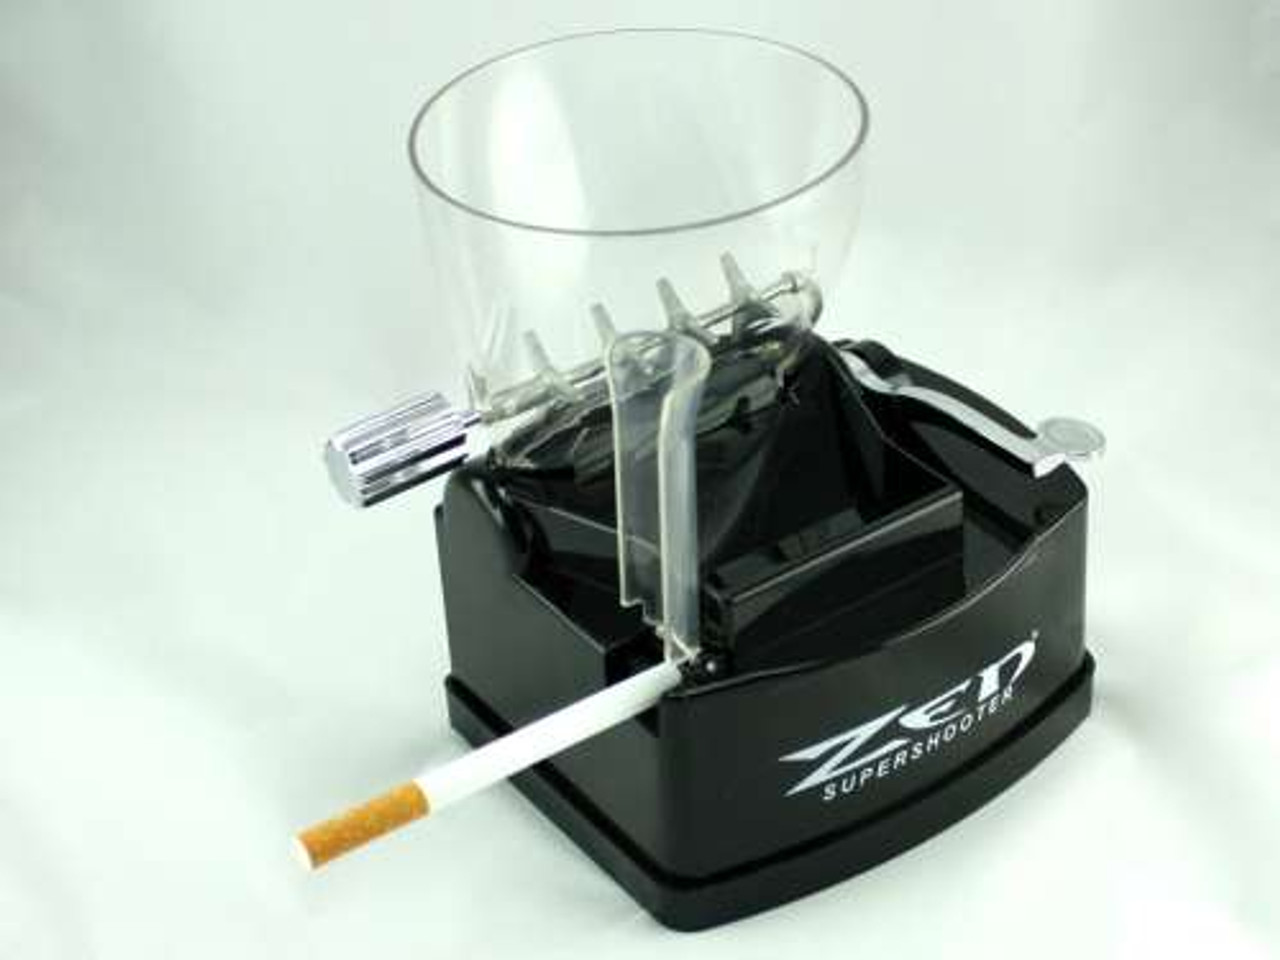 Zen Super Shooter Electric Cigarette Rolling Machine